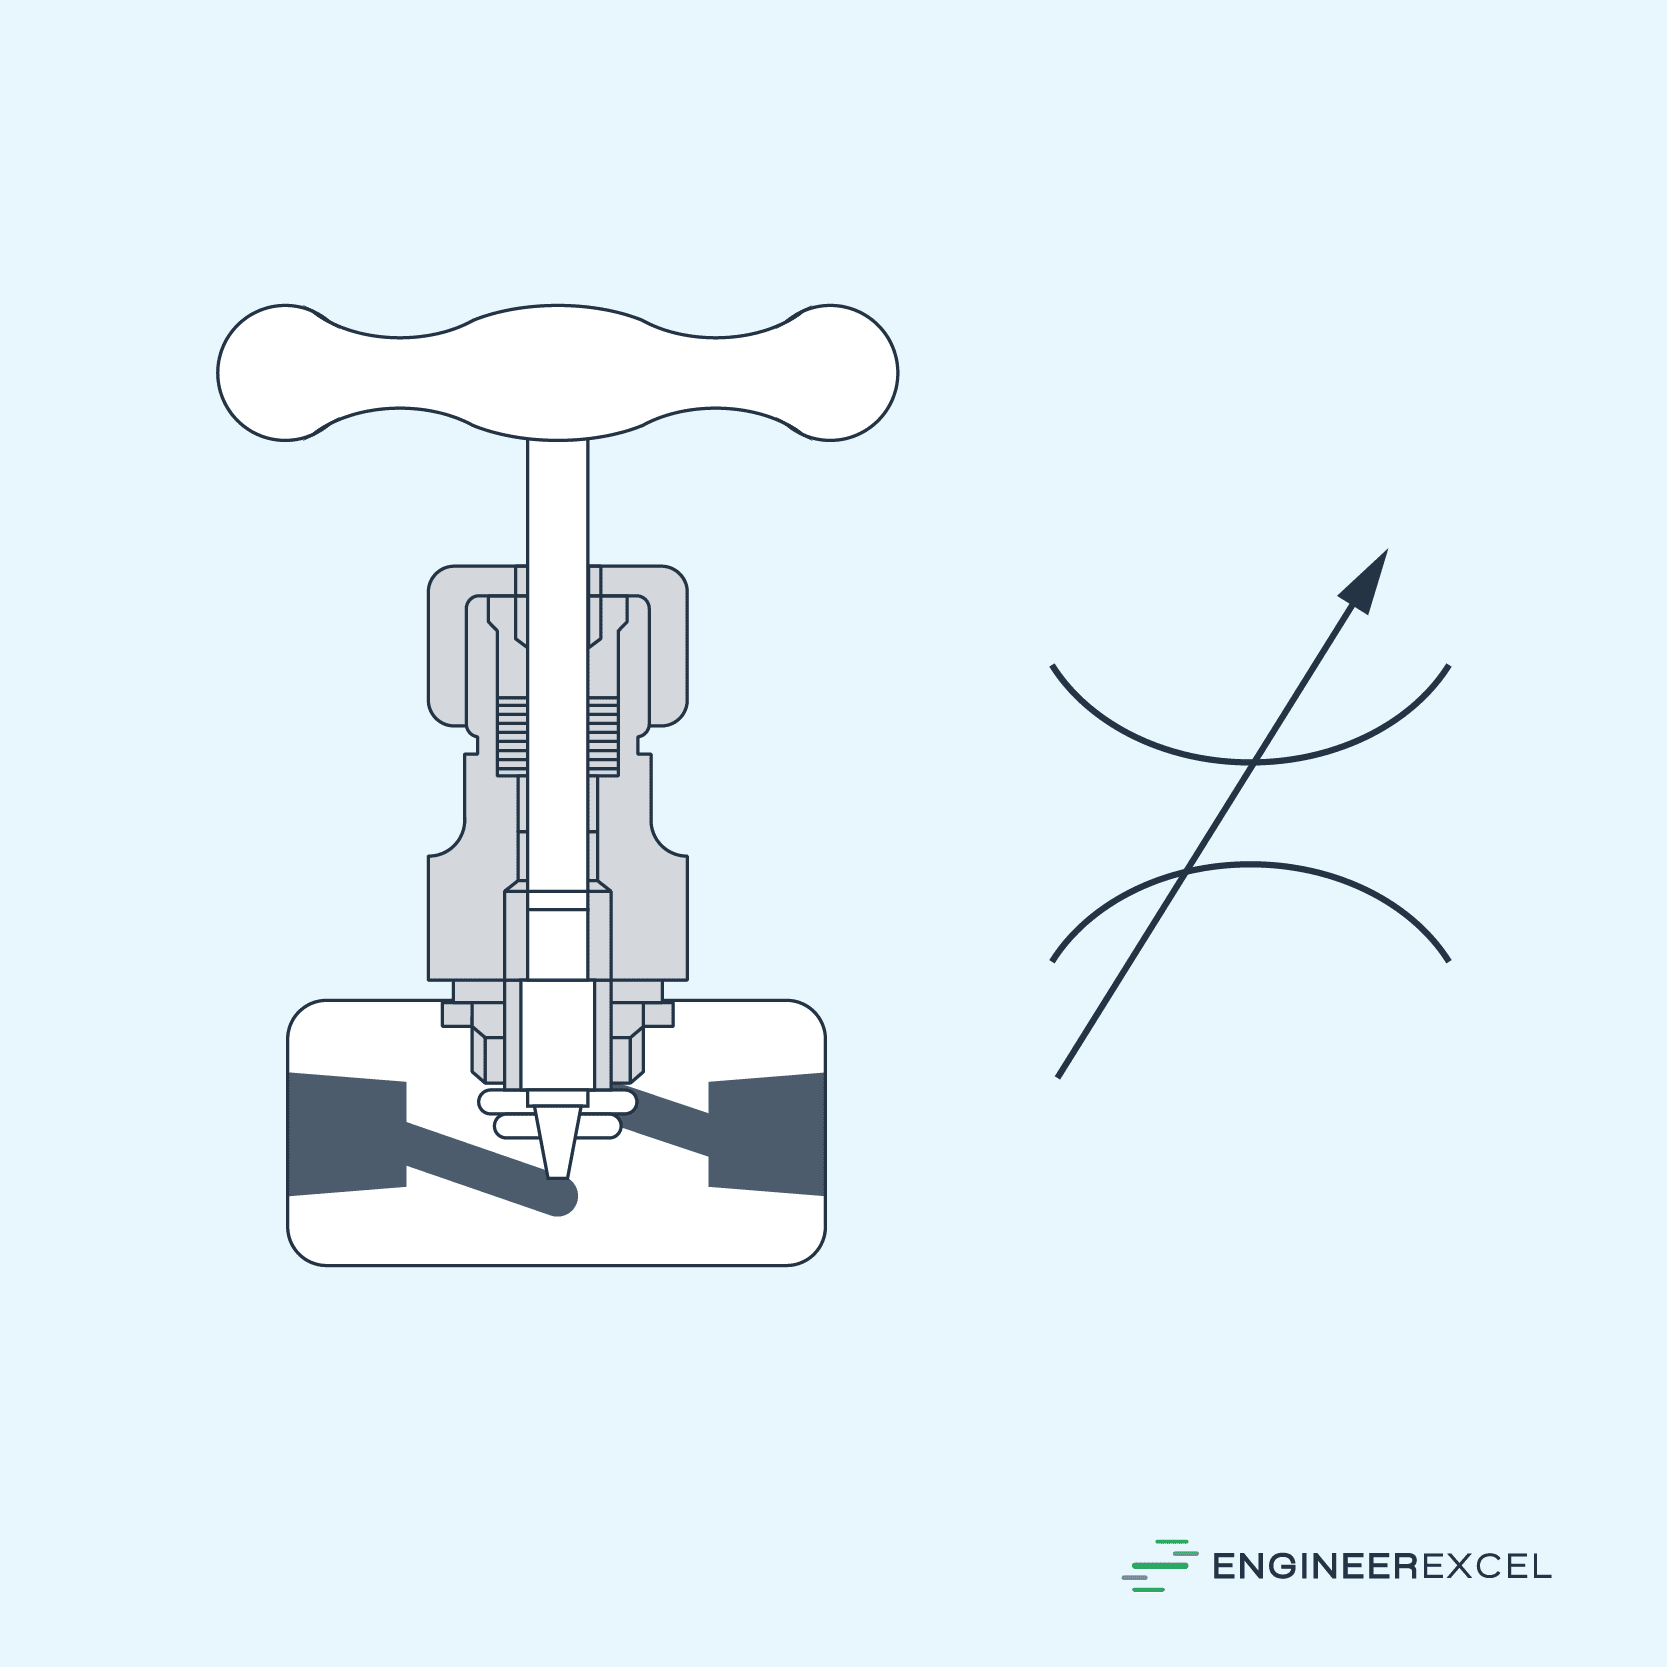 schematic symbol of a needle valve